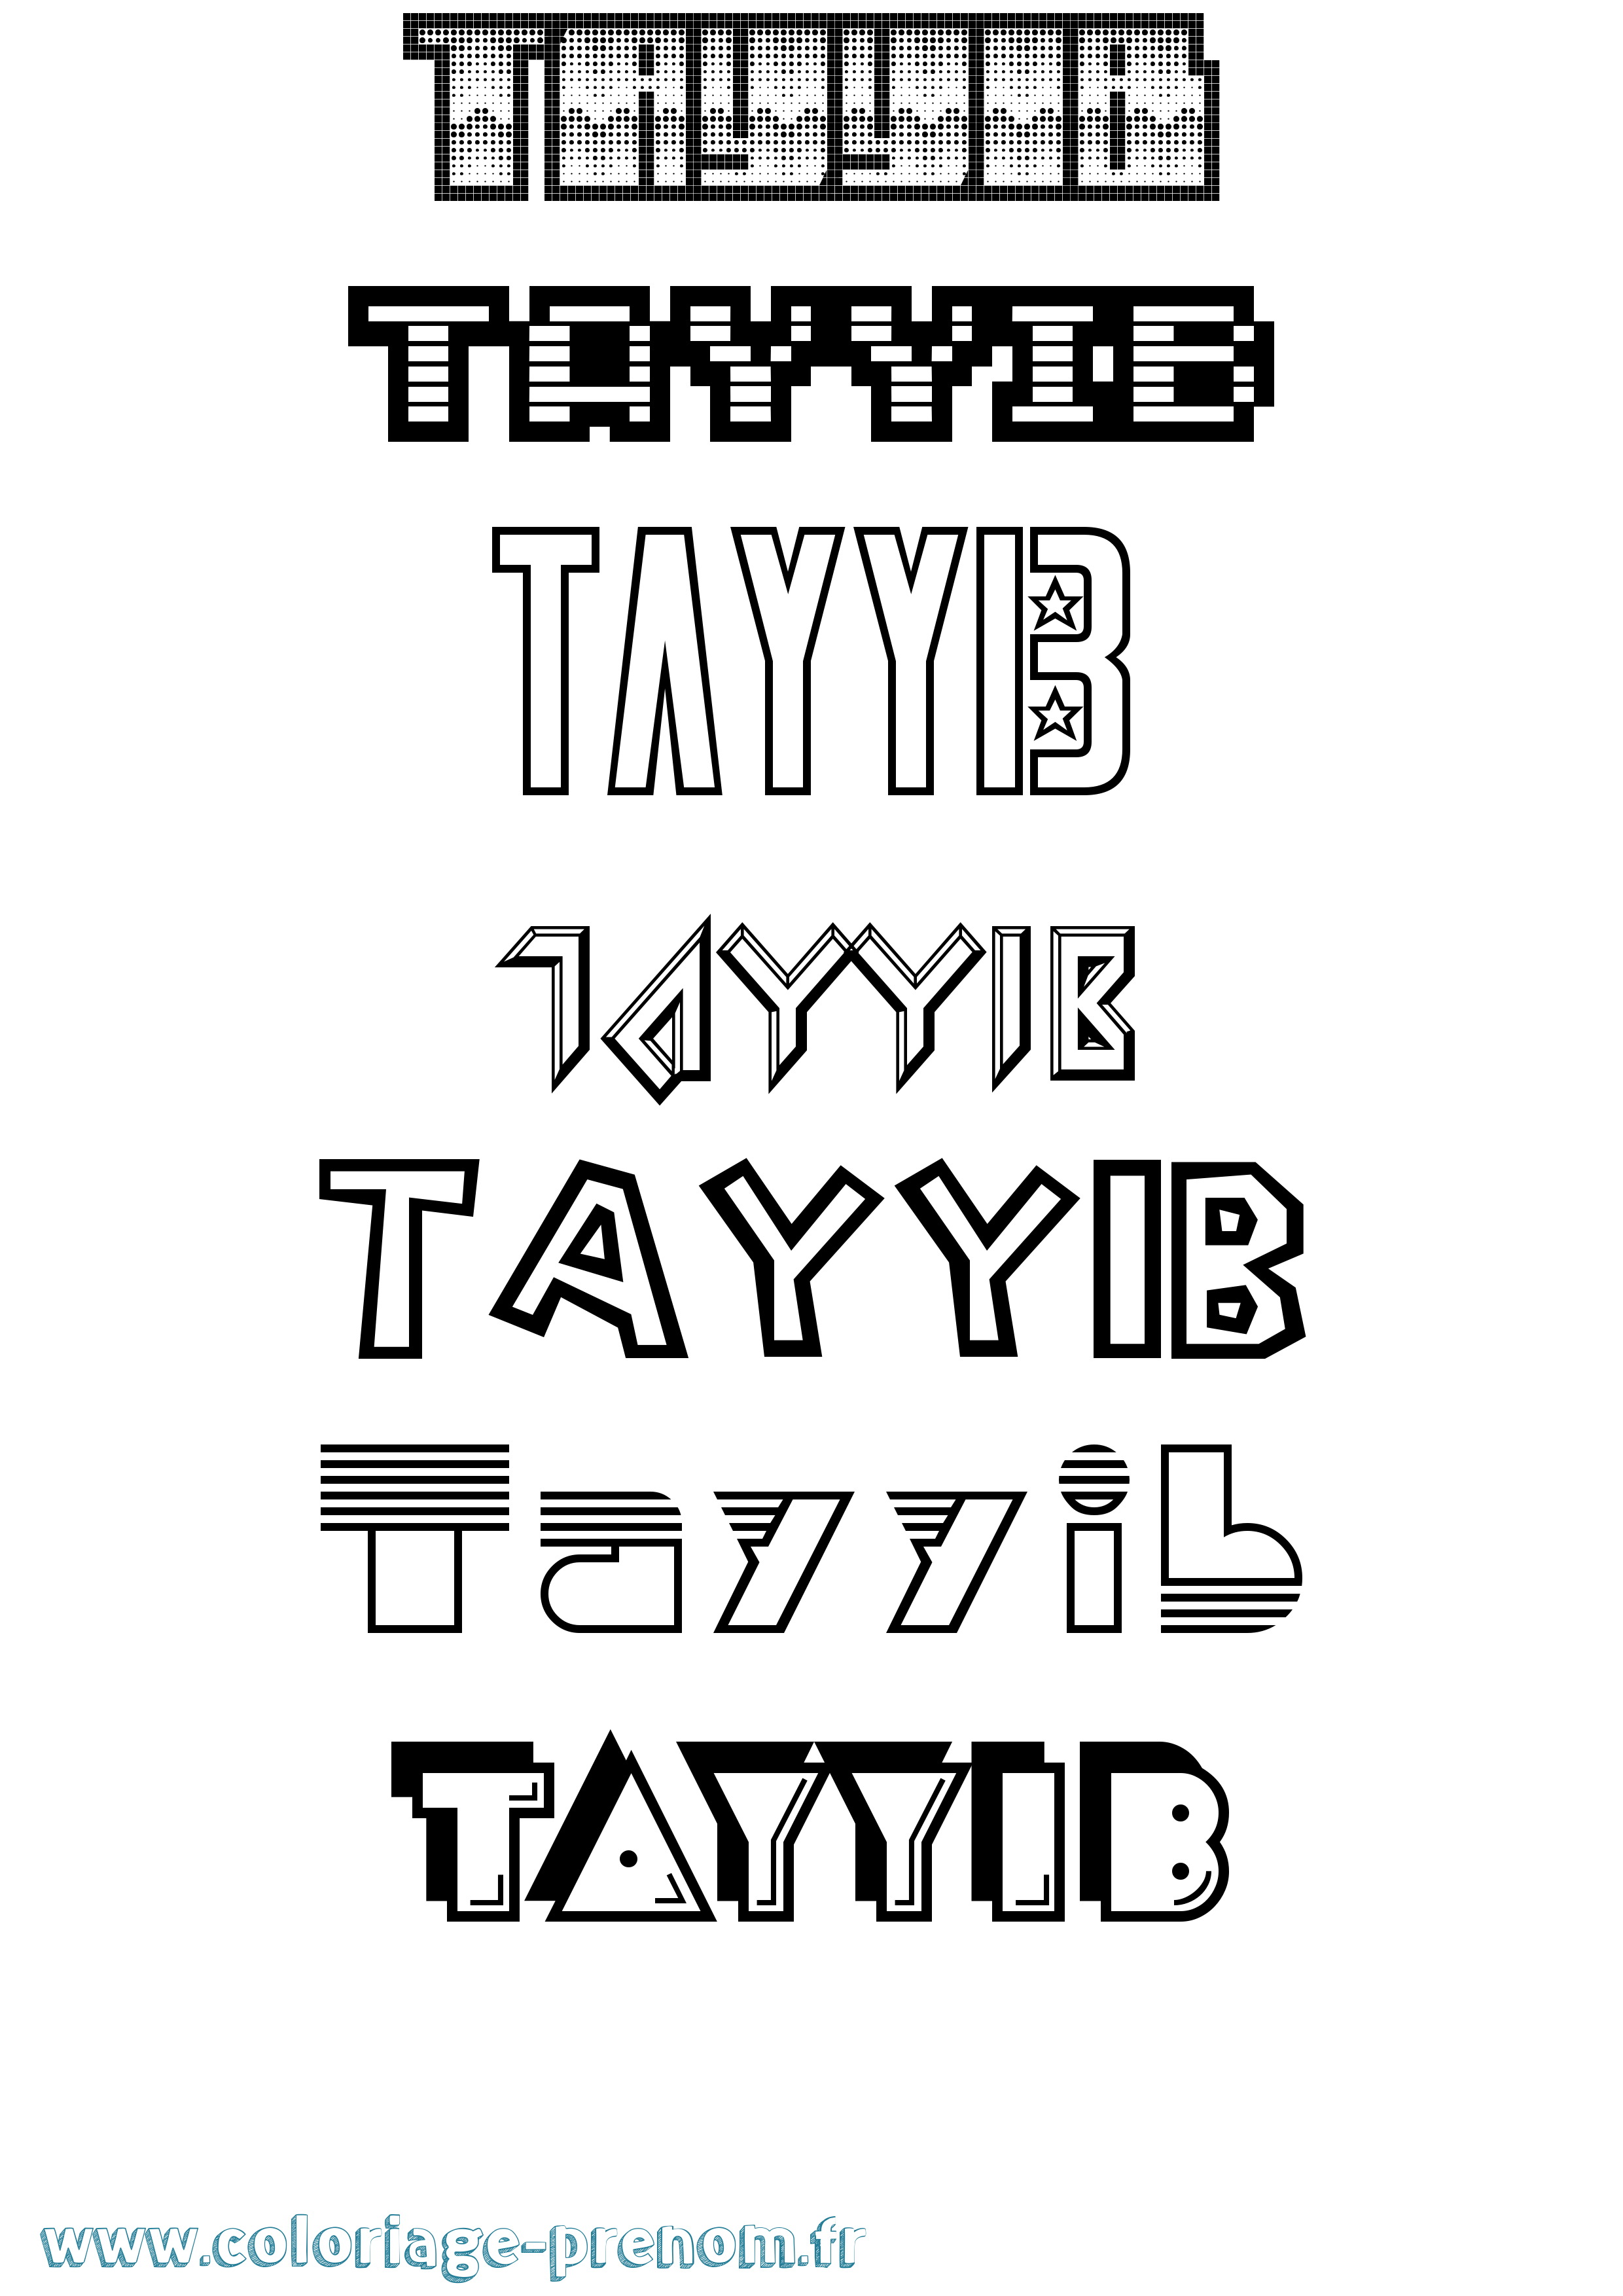 Coloriage prénom Tayyib Jeux Vidéos